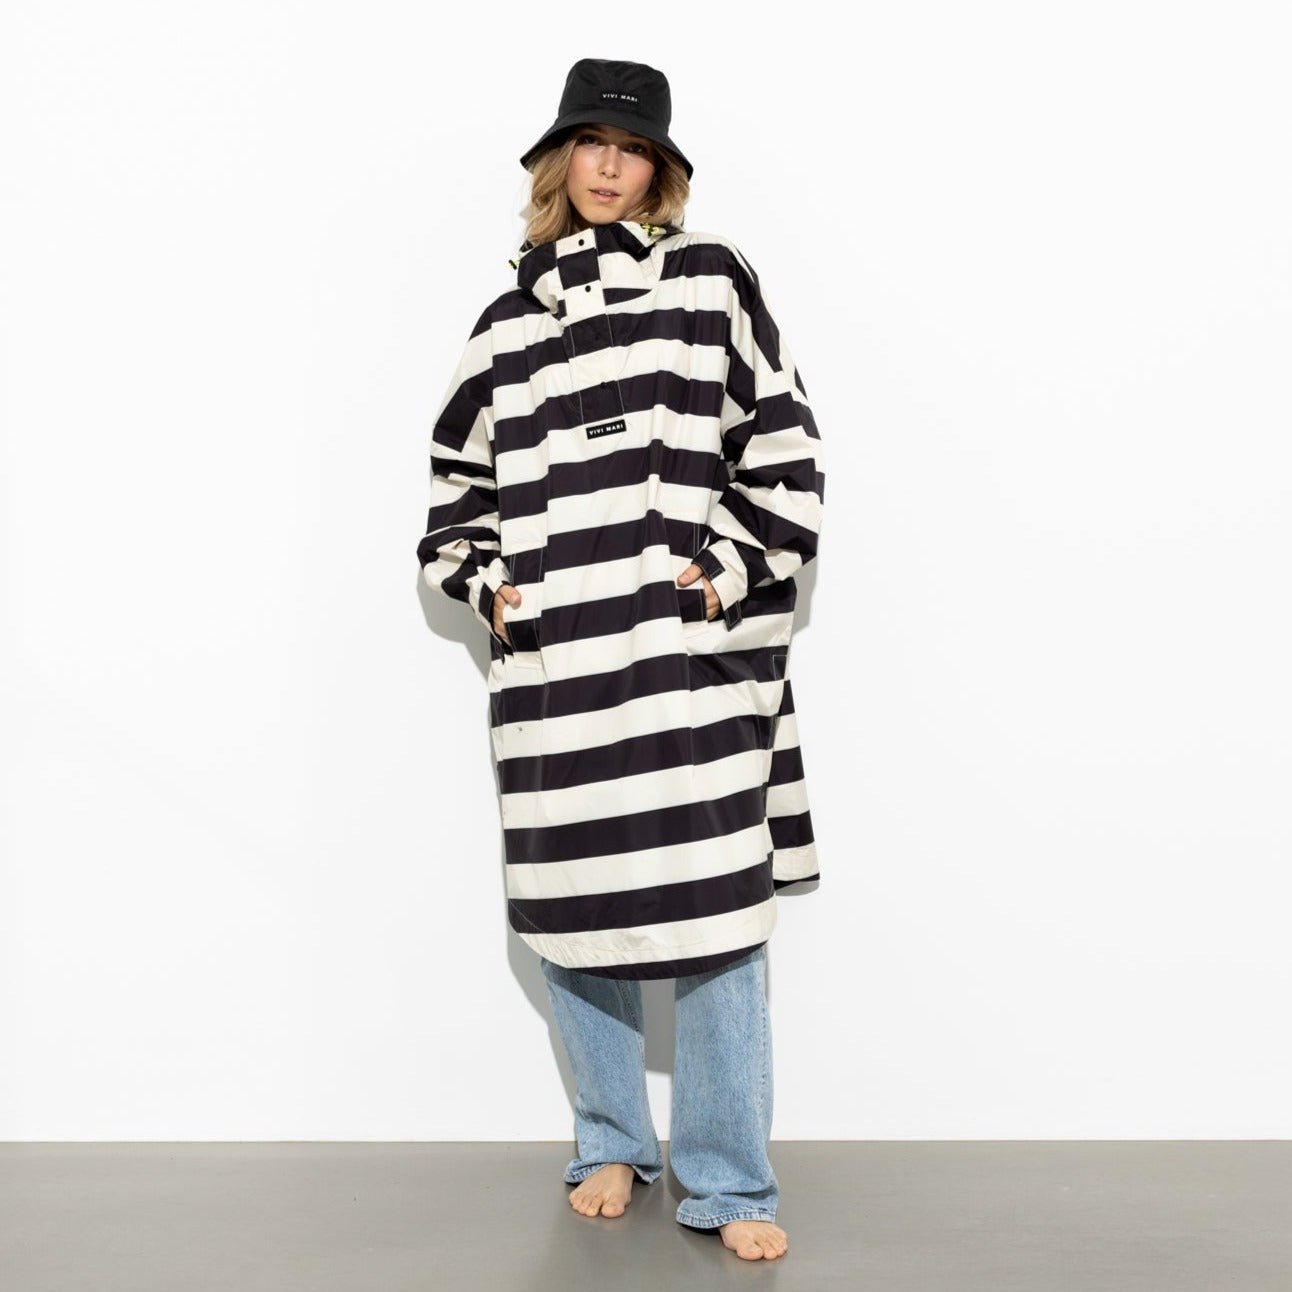 Raincoat bold stripes - black/sand - VIVI MARI